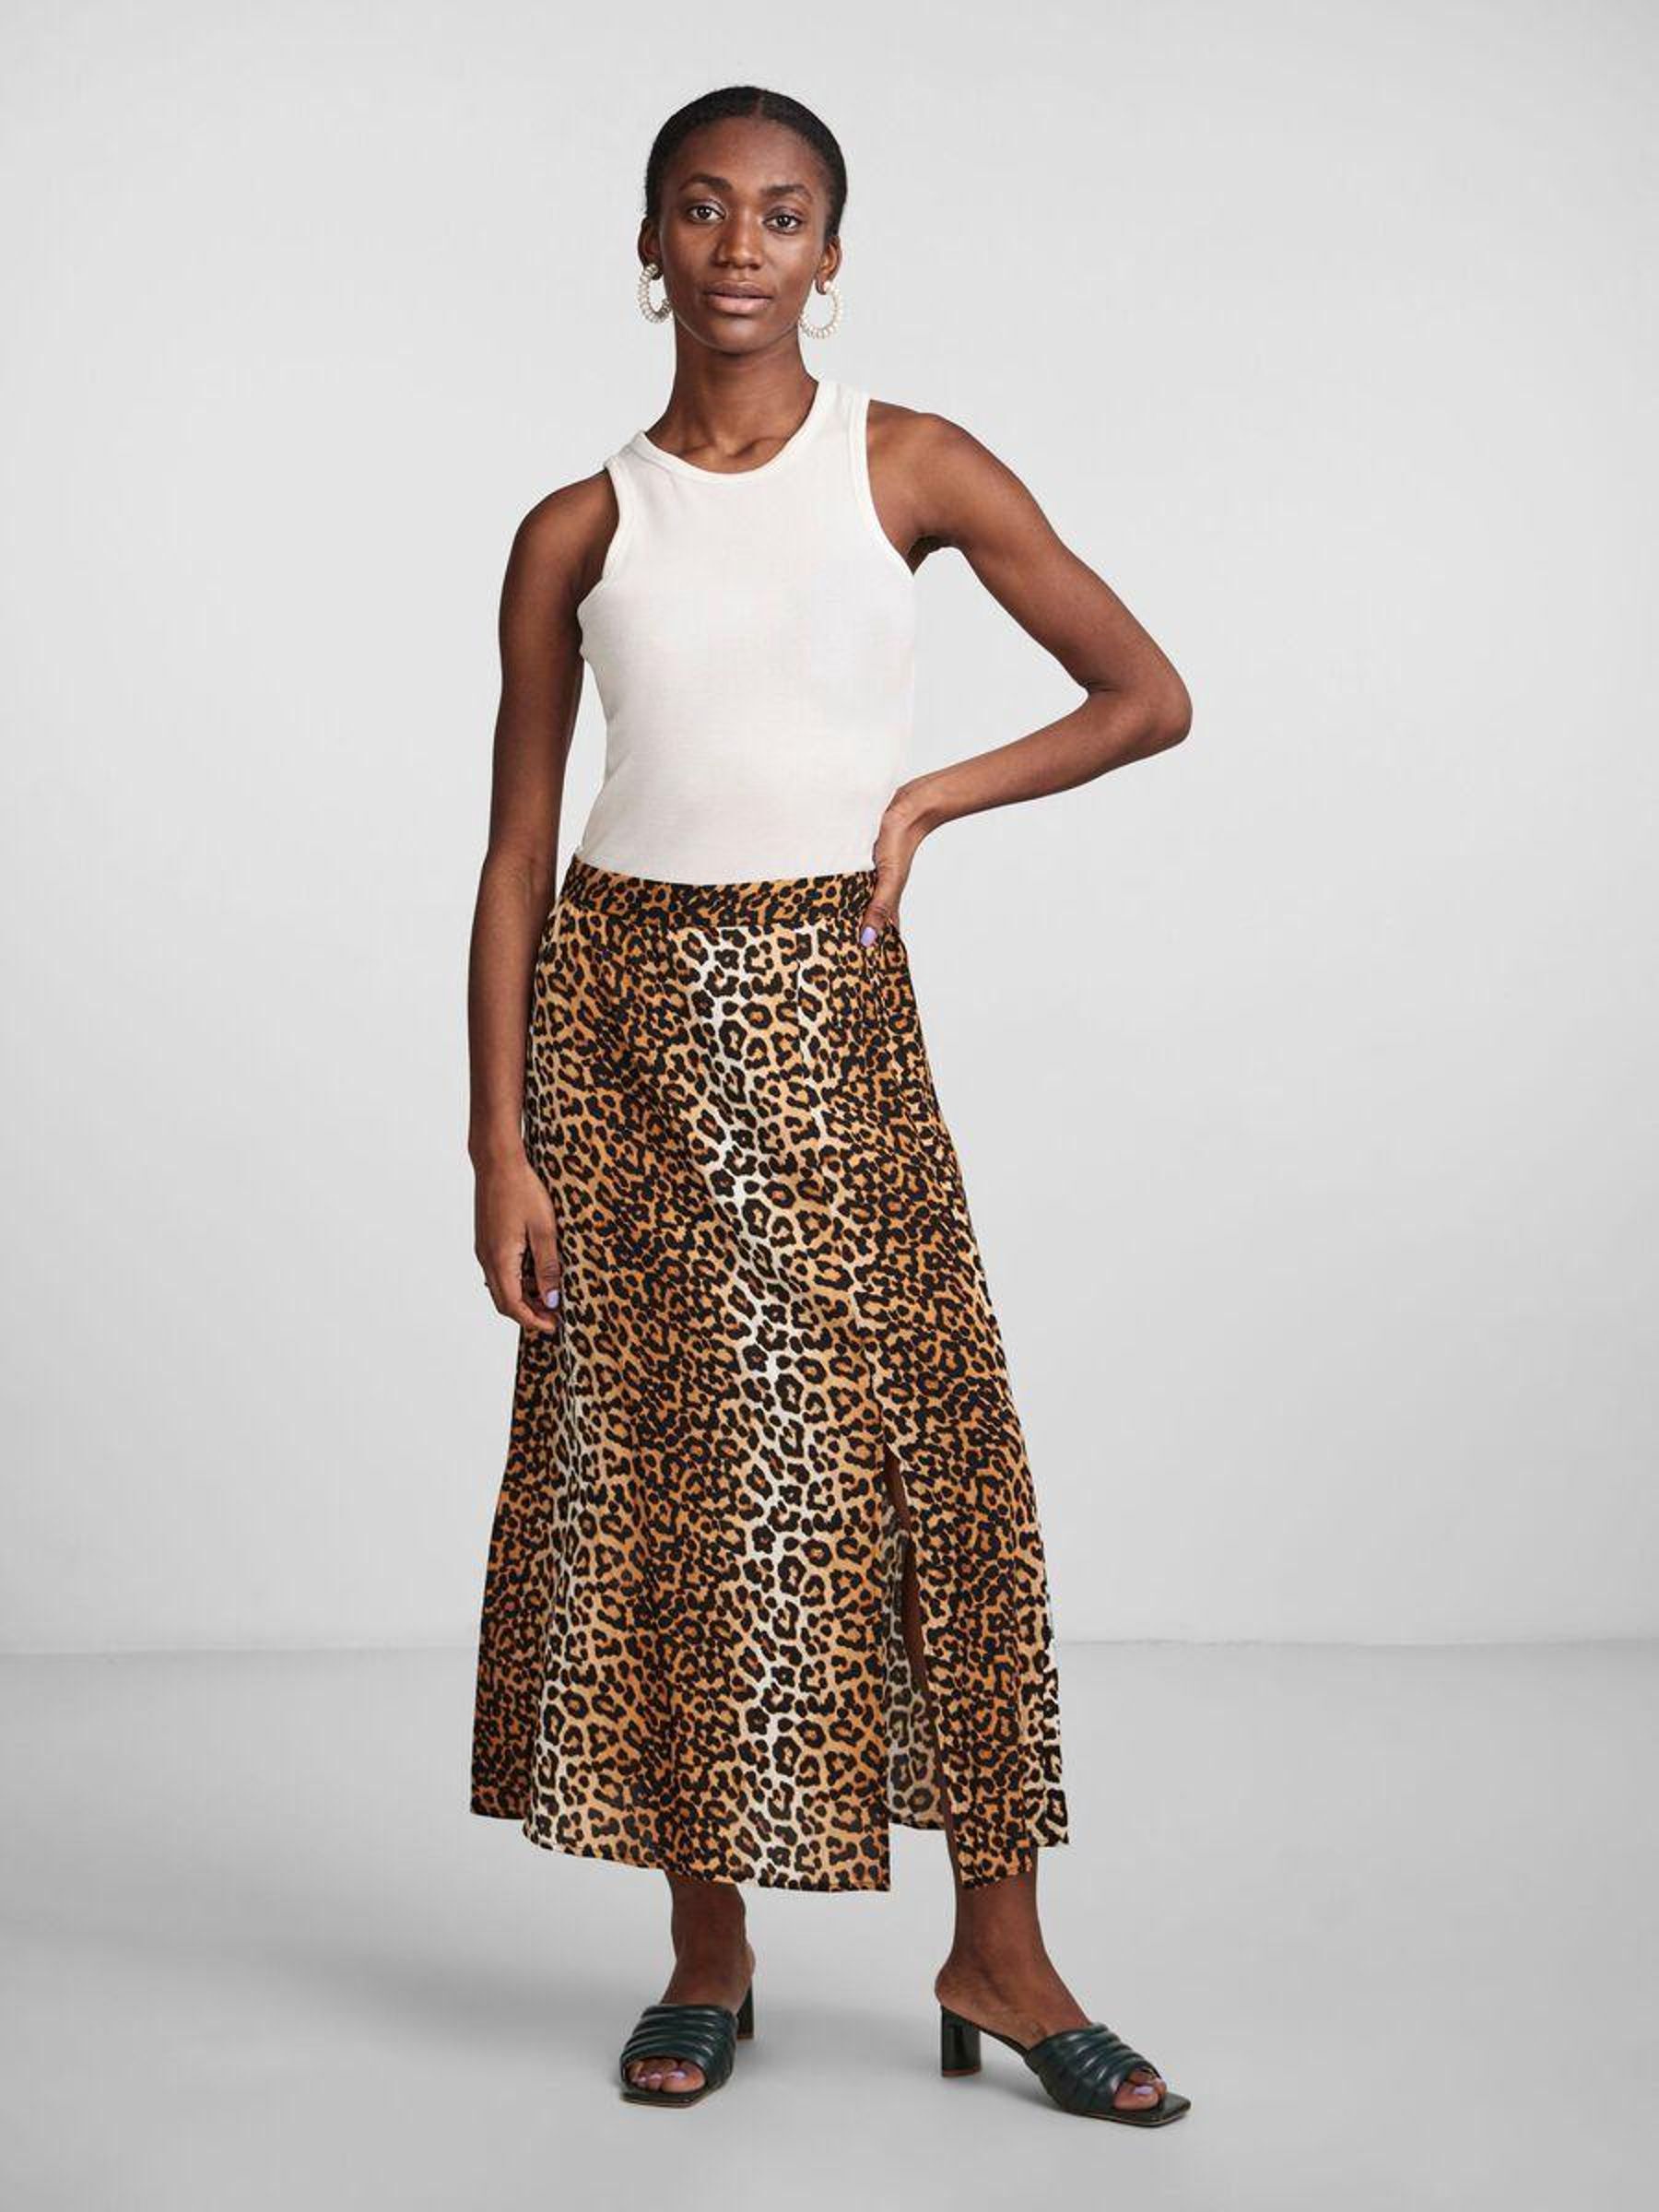 Ourdve Skirt Set  Buy Ourdve Cotton Top  Skirt Setnomad Setcamel Set  of 2 Online  Nykaa Fashion